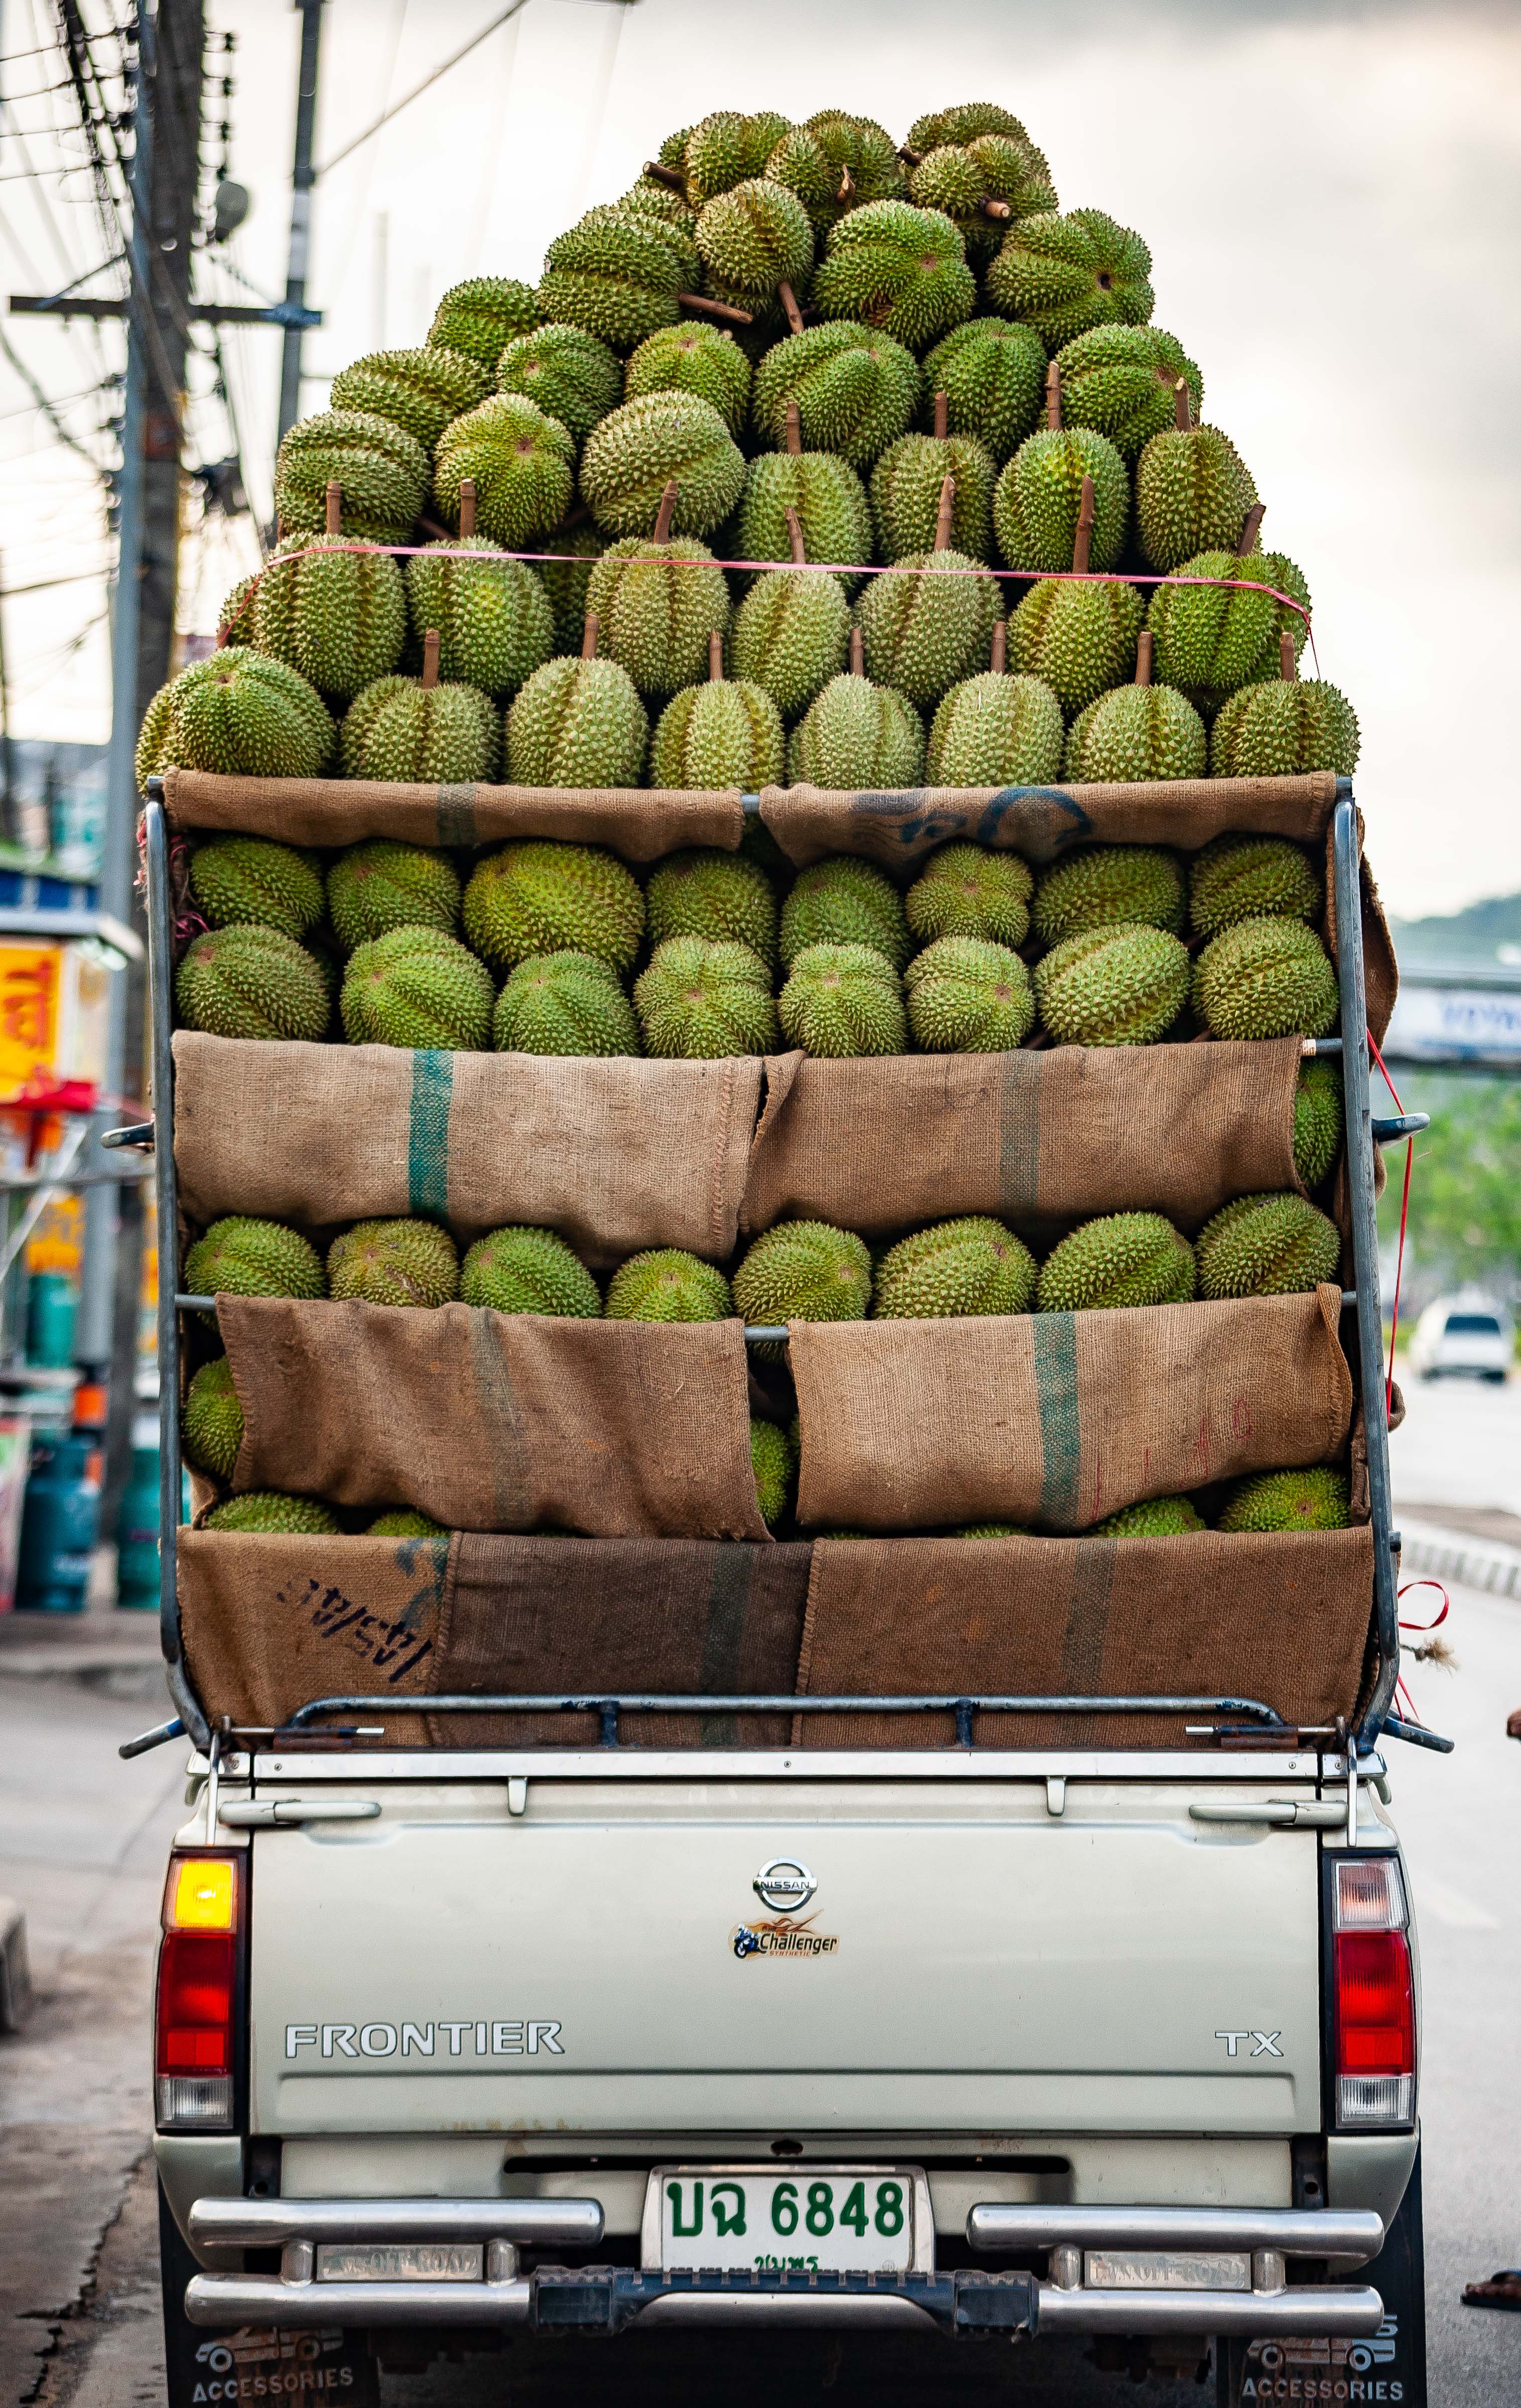 Thailand, Chanthaburi Prov, Durian Truck, 2008, IMG 0099